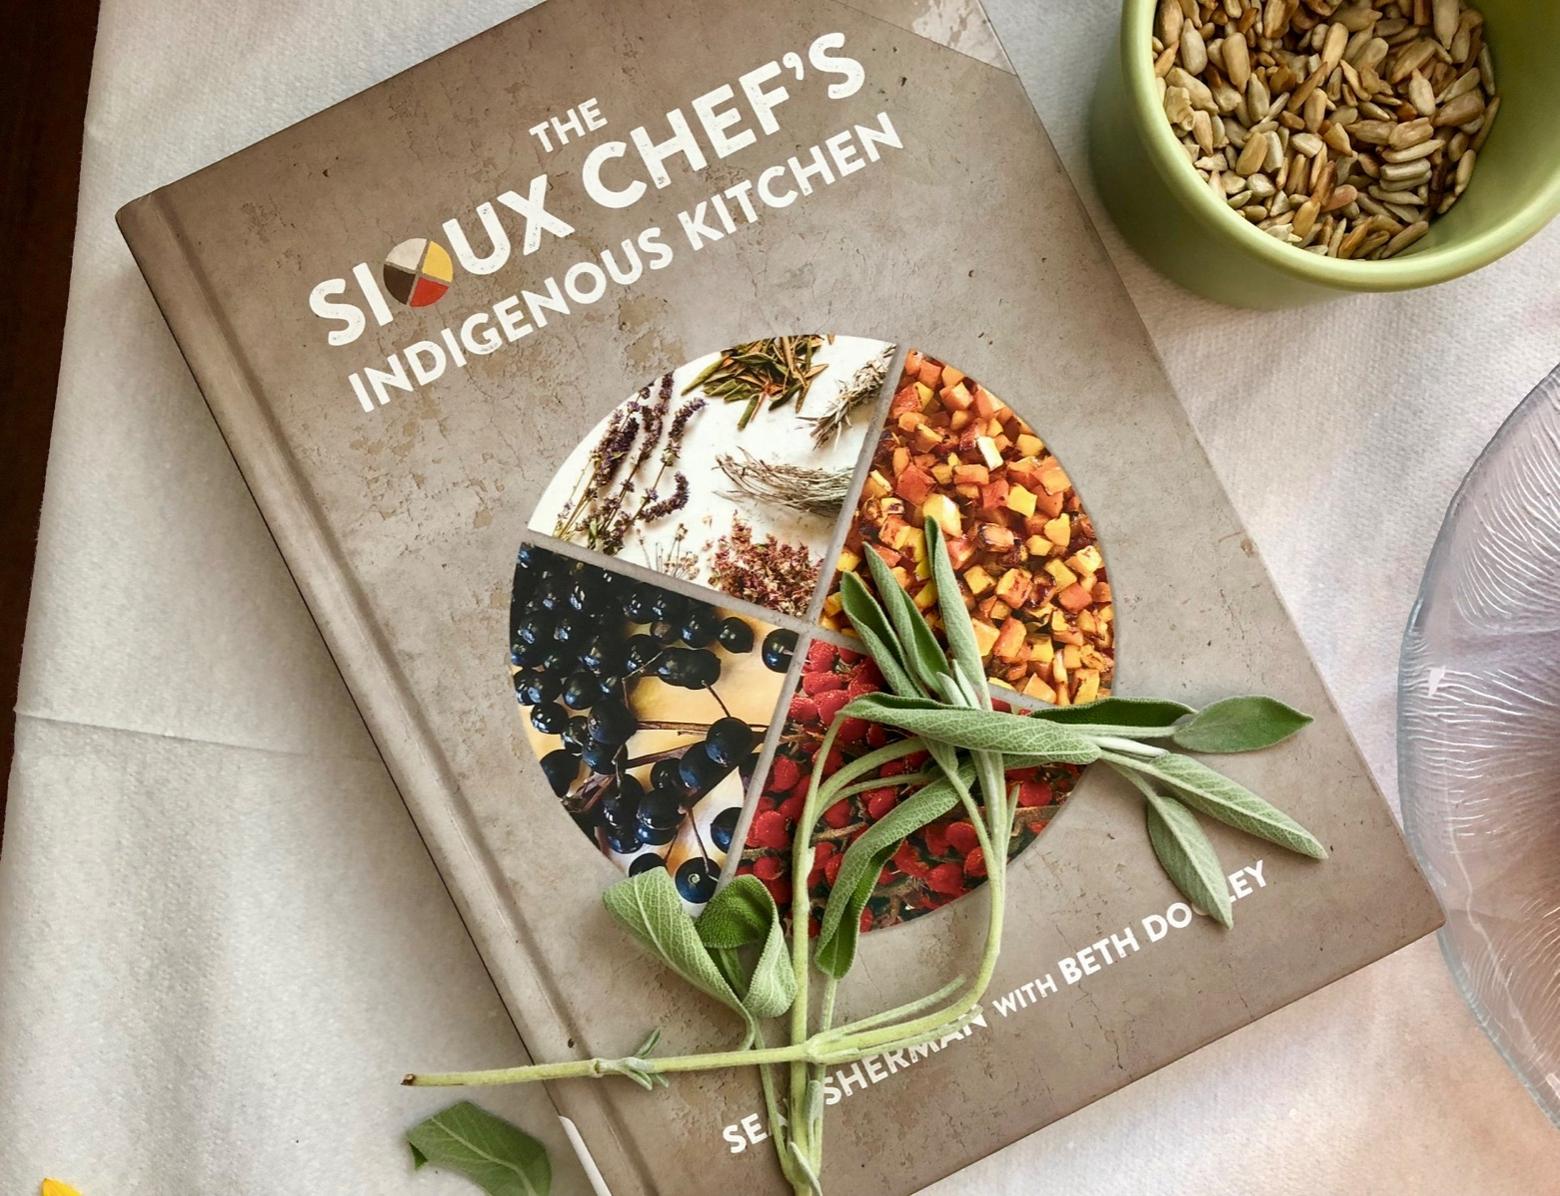 Sean Sherman's book, co-written with Beth Dooley, won the prestigious James Beard Award for Best American Cookbook in 2018.